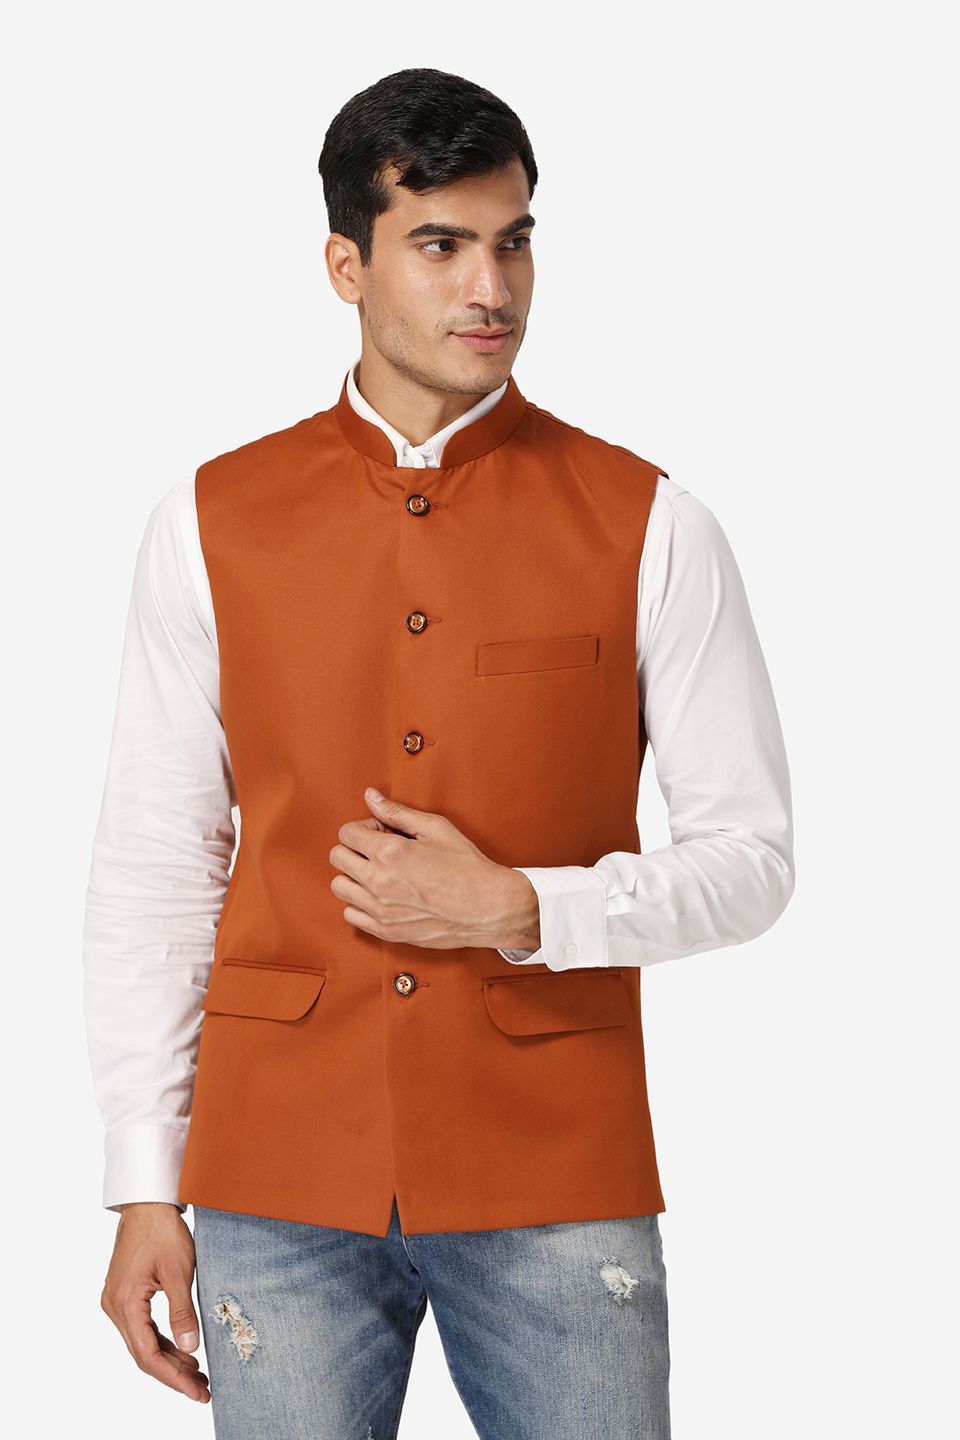 WINTAGE Men's Poly Cotton Festive and Casual Nehru Jacket Vest Waistcoat : Orange